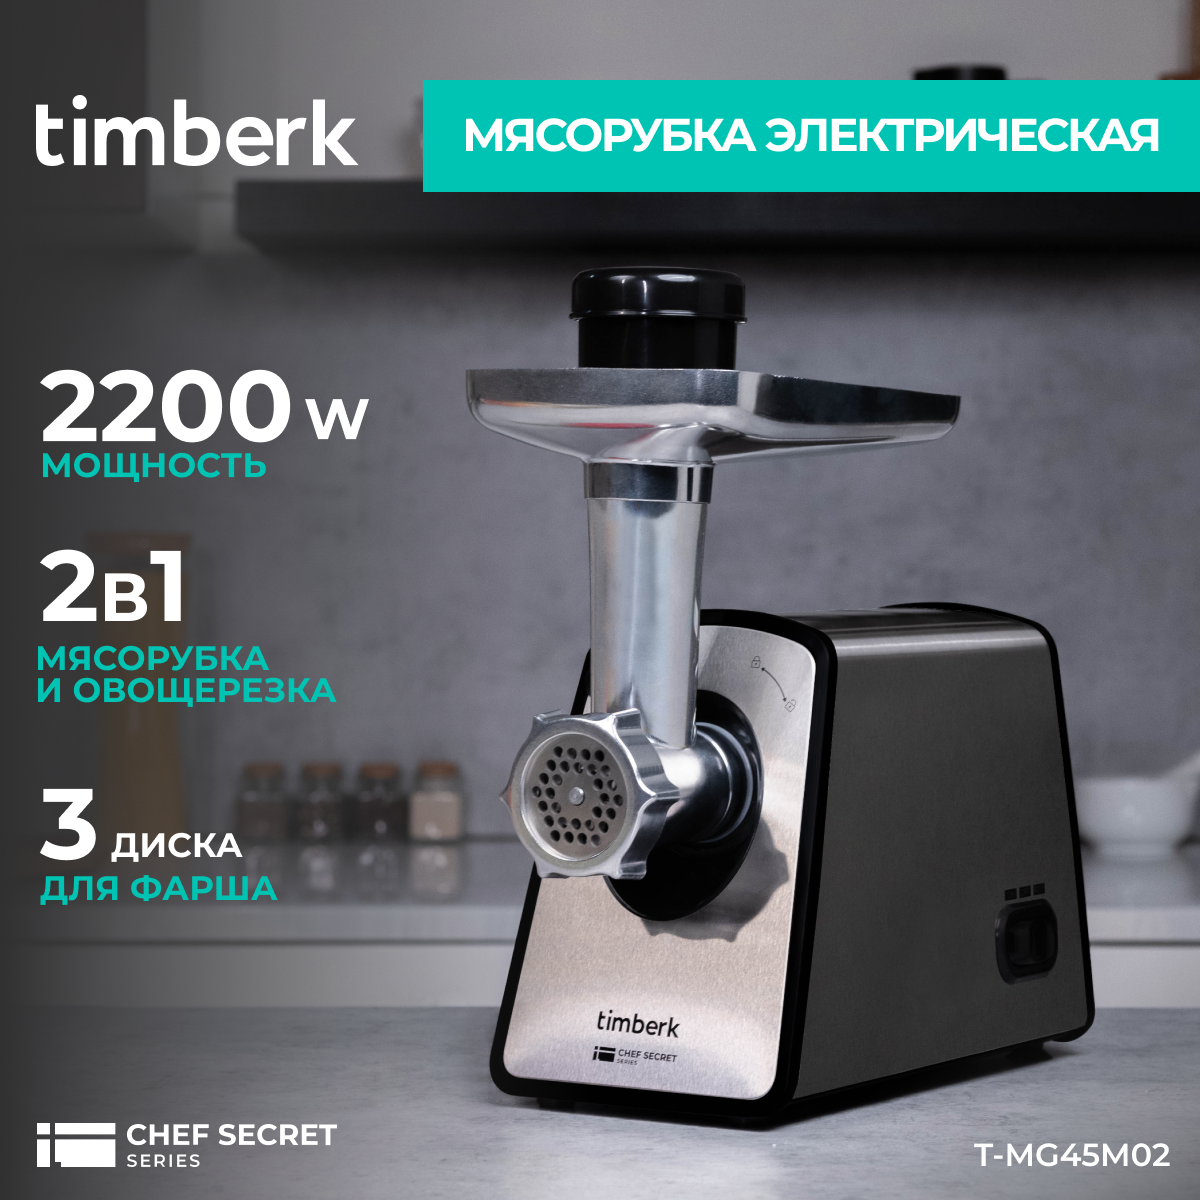 Электромясорубка Timberk T-MG45M02 450 Вт серебристая chefs